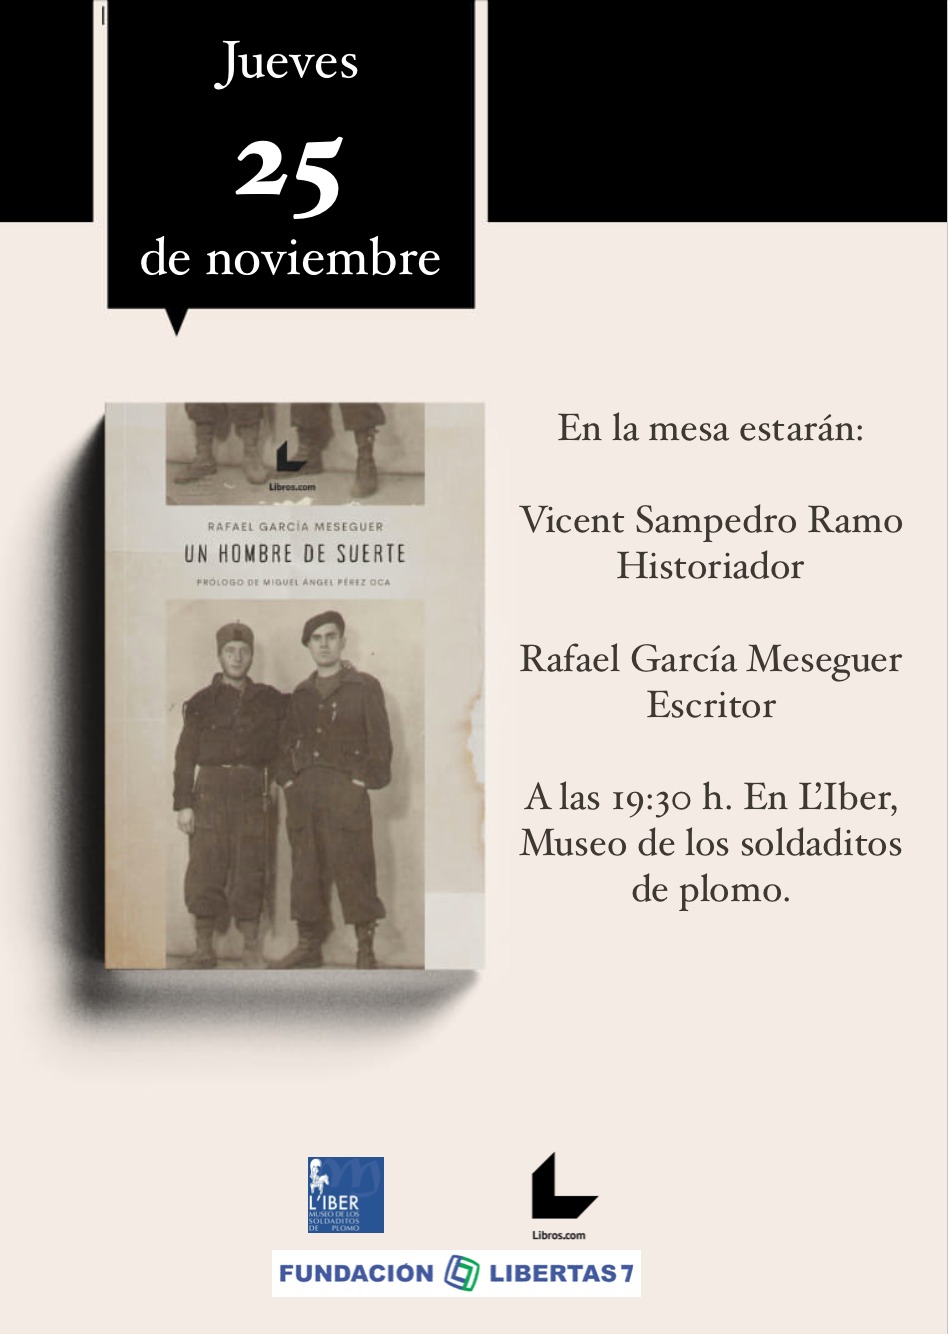 Presentación del libro “Un hombre de suerte” de Rafael García Meseguer